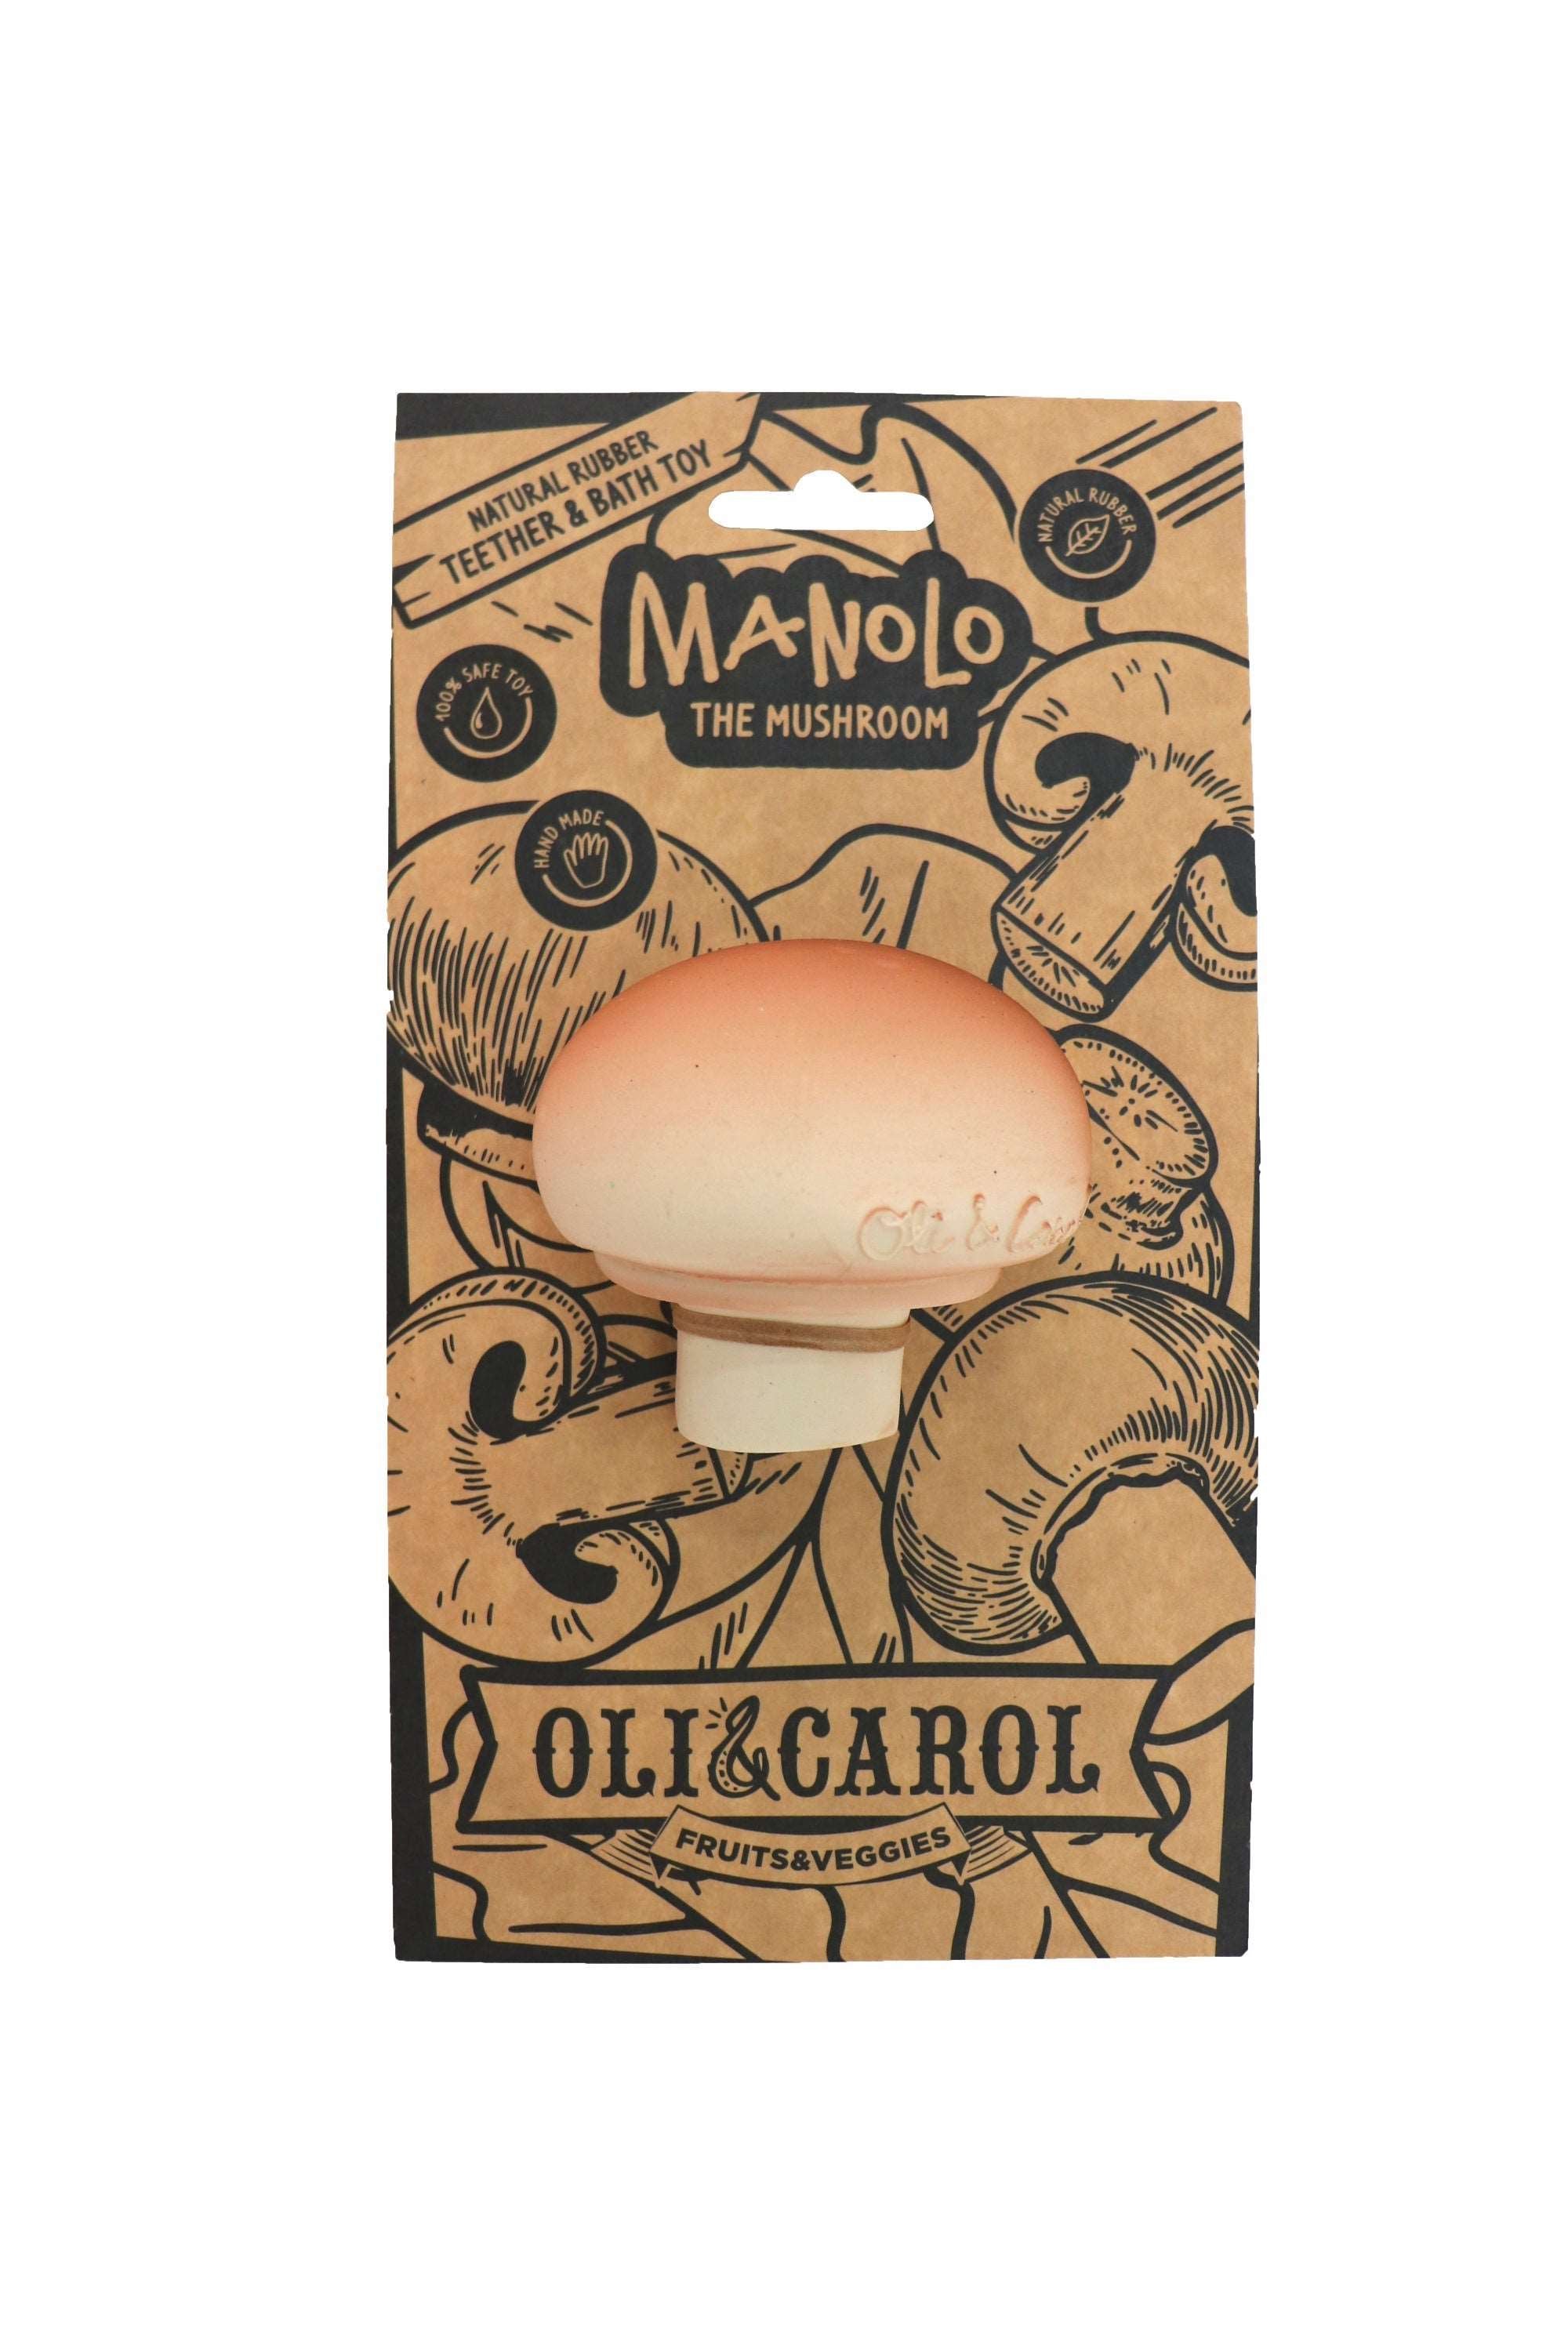 Manolo the Mushroom Baby Teether - Oli&Carol